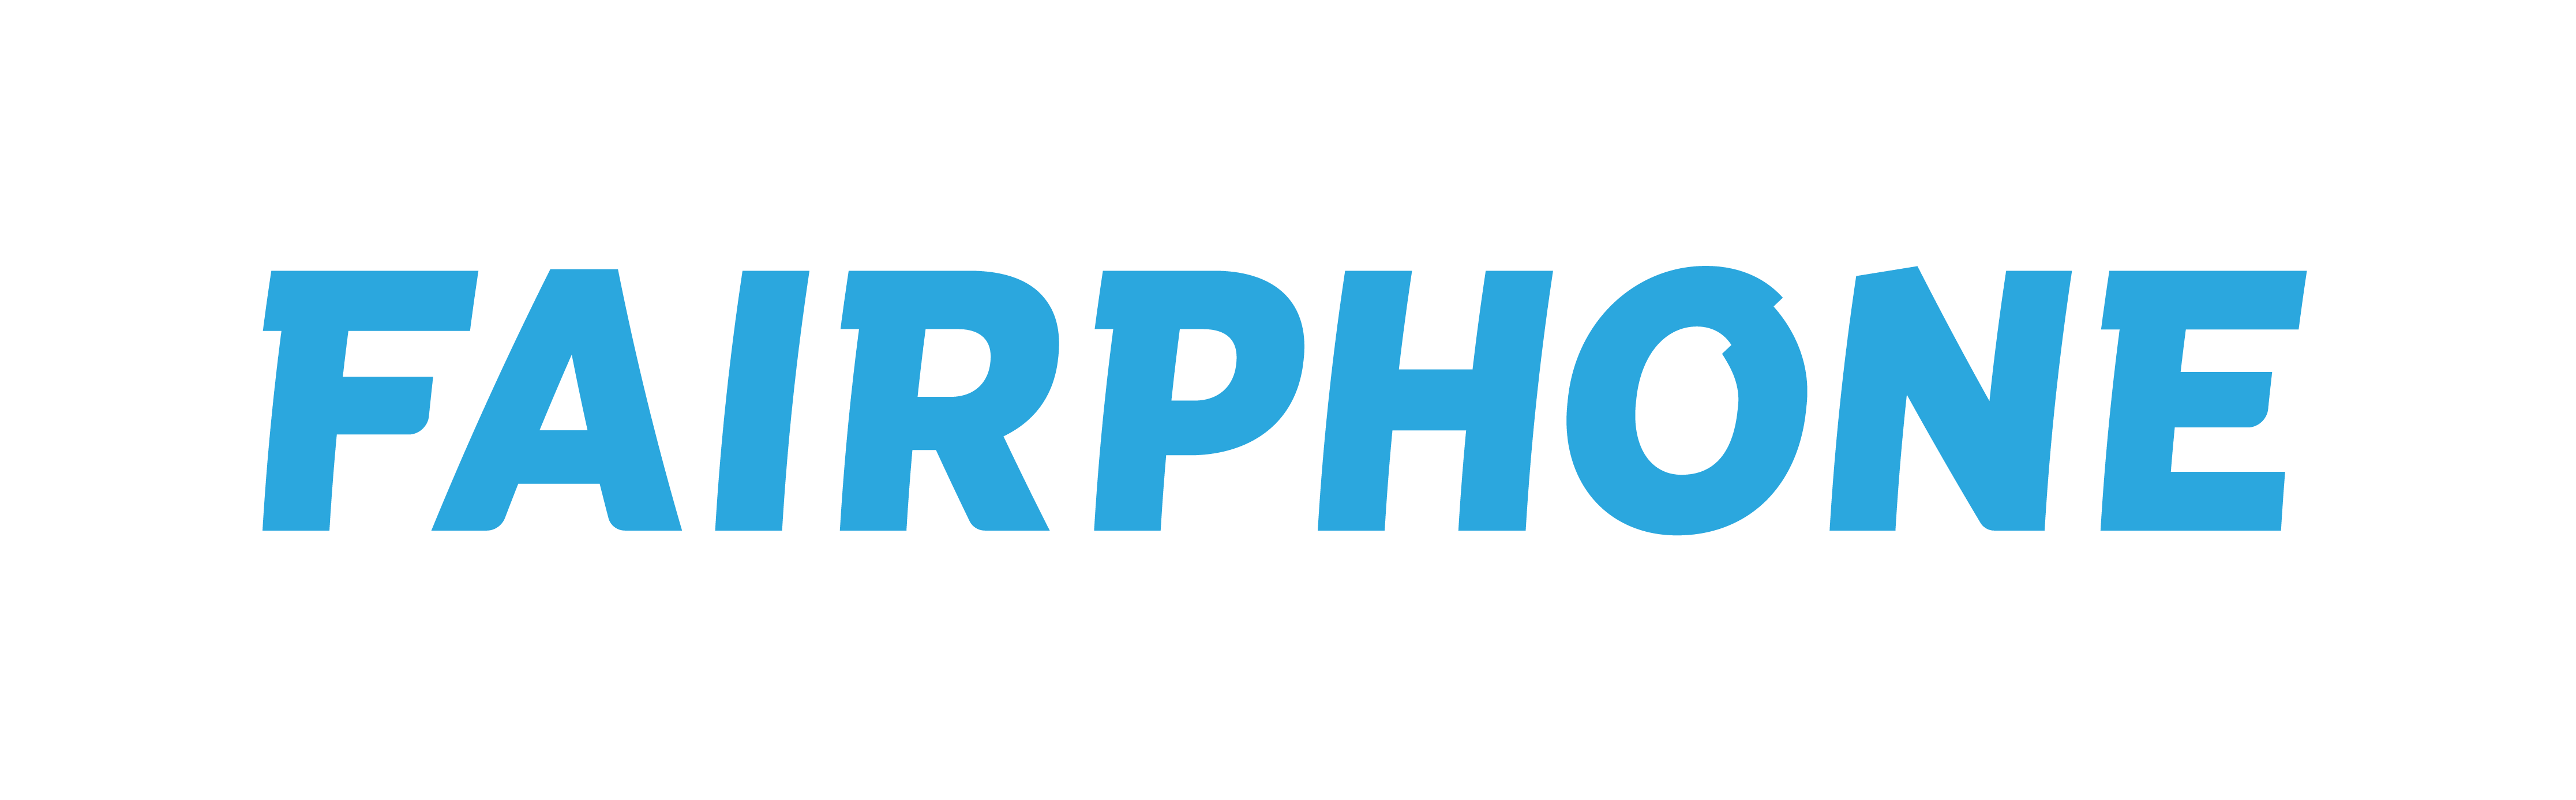 Fairphone-logo